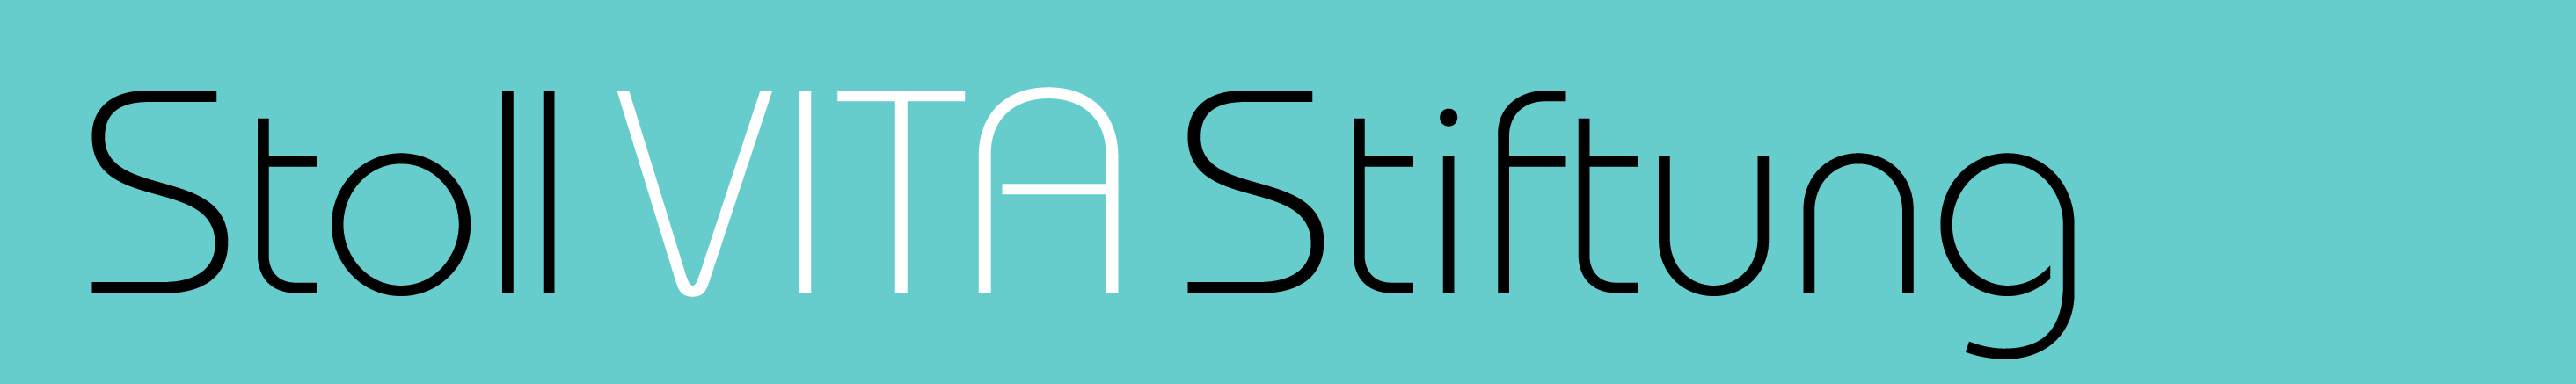 Stoll VITA Stiftung Logo 4c oB